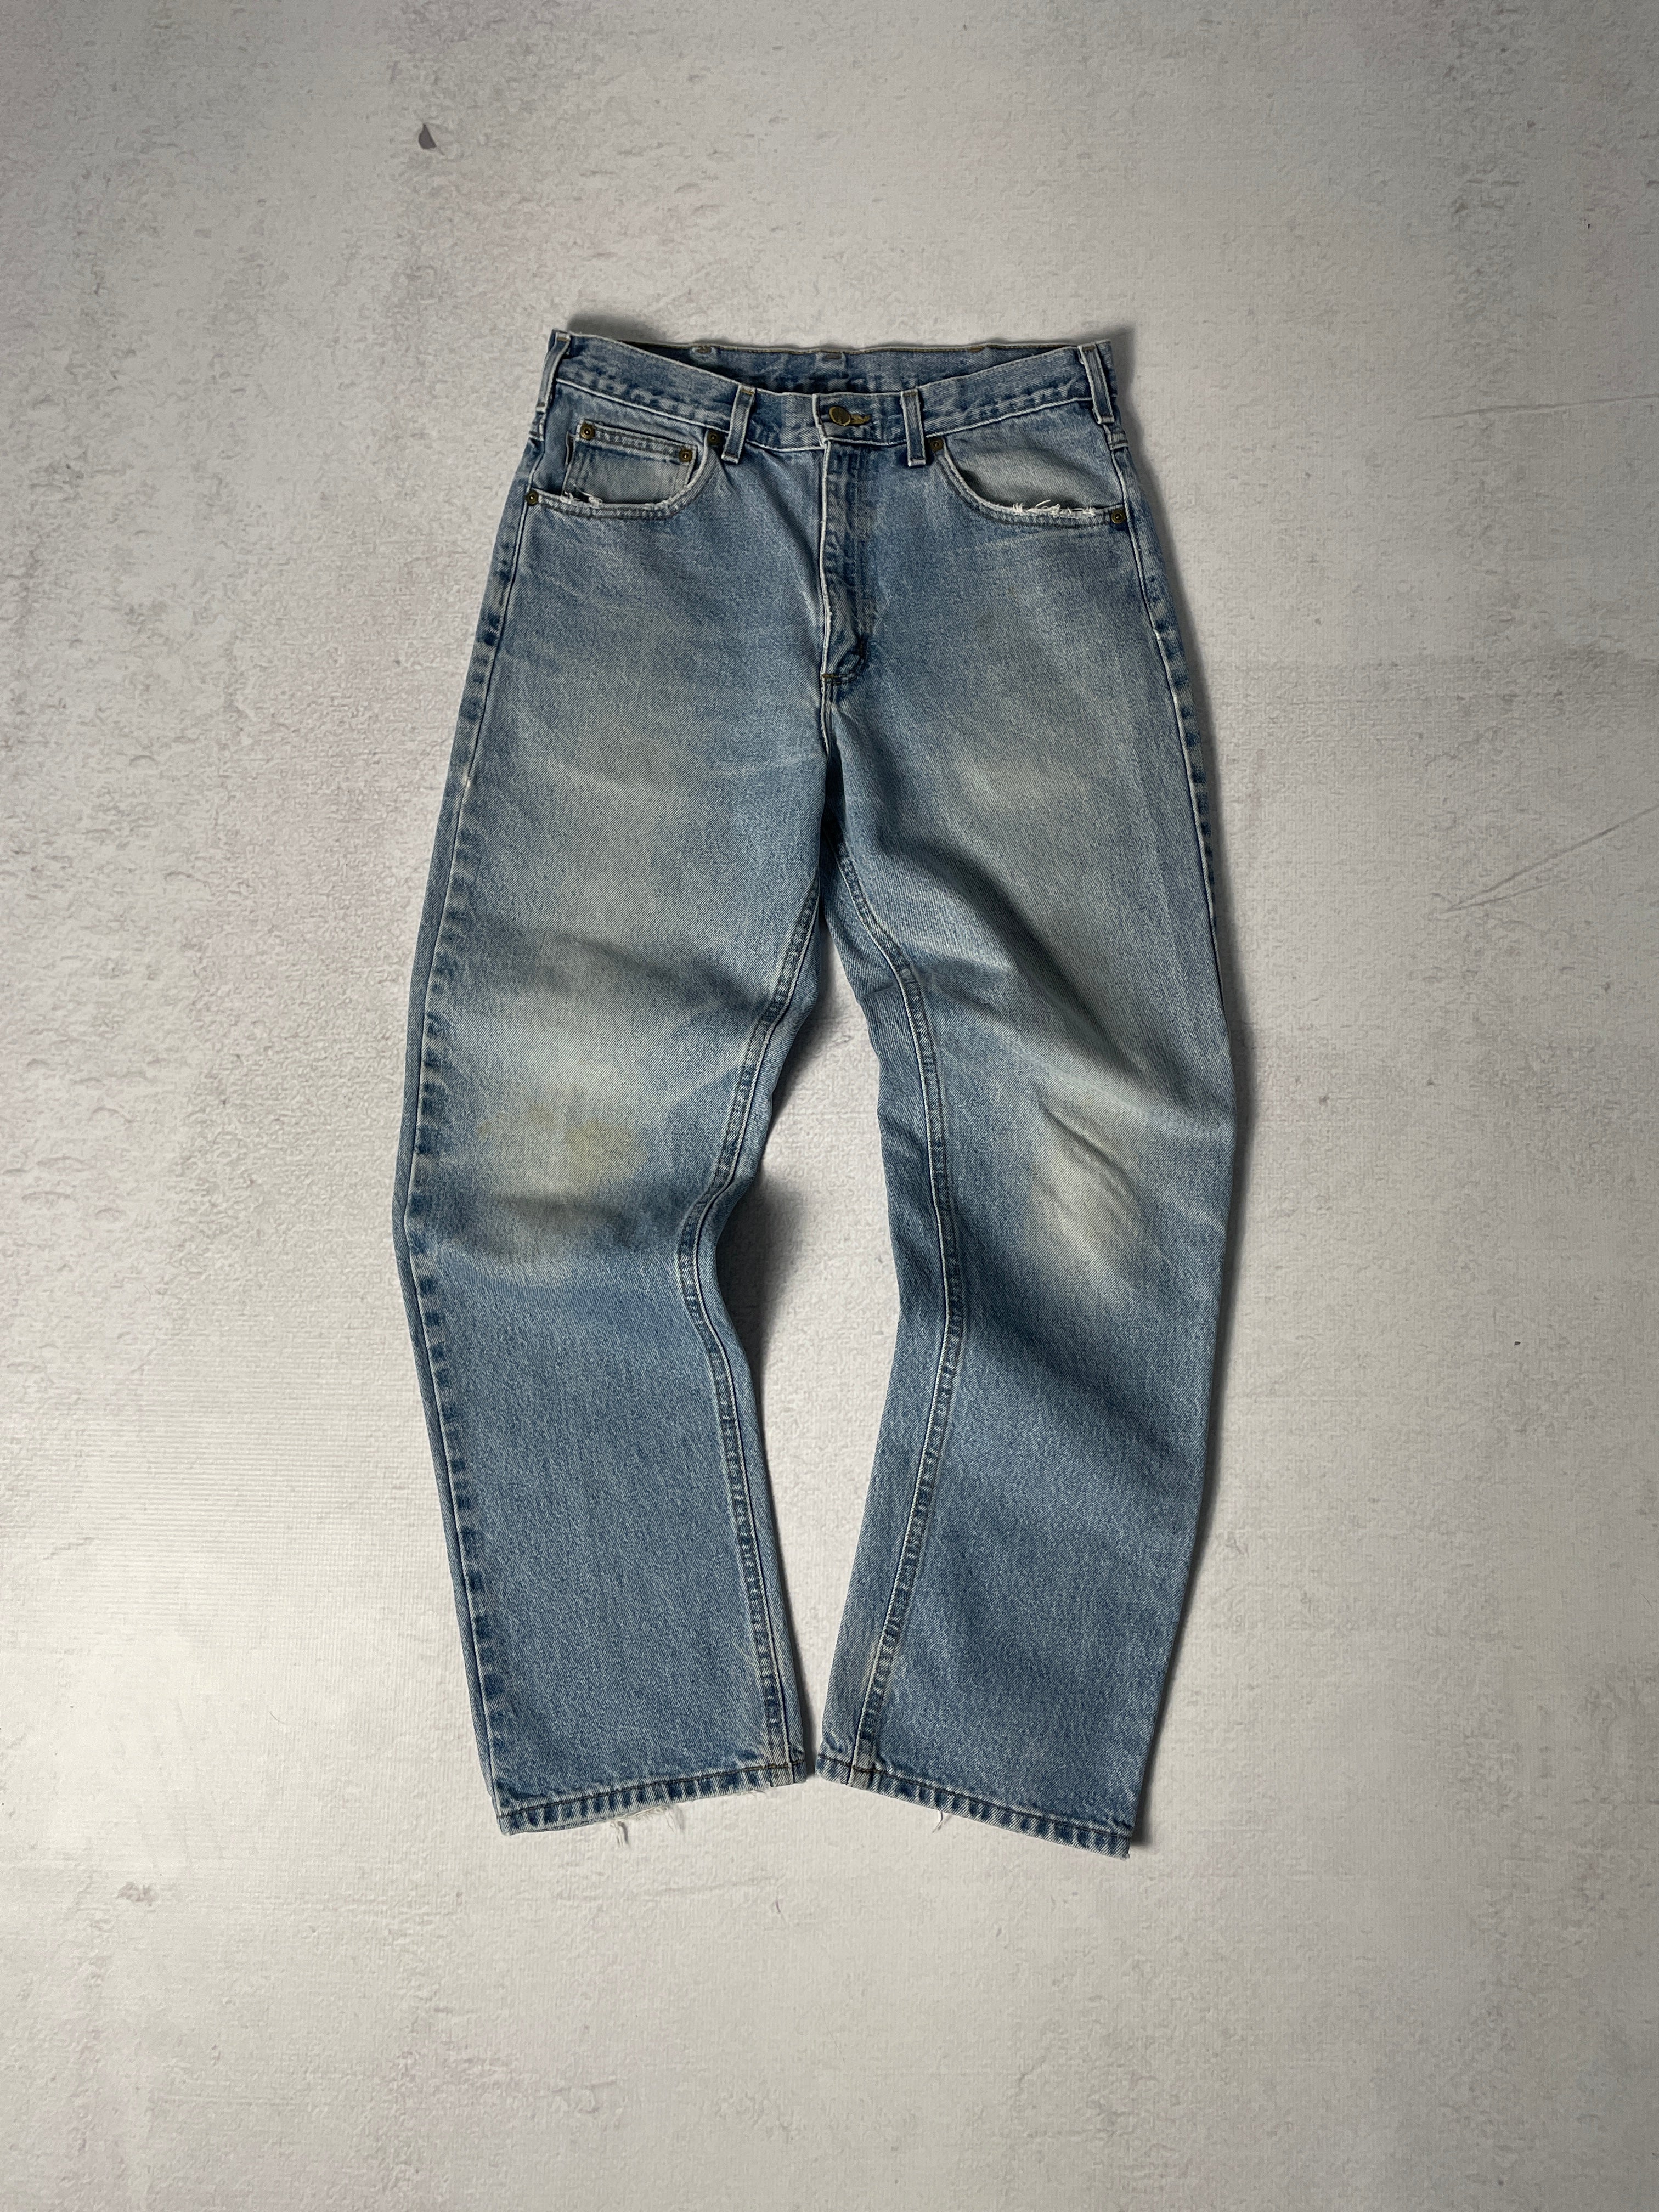 Vintage Carhartt Jeans - Men's 32 x 32